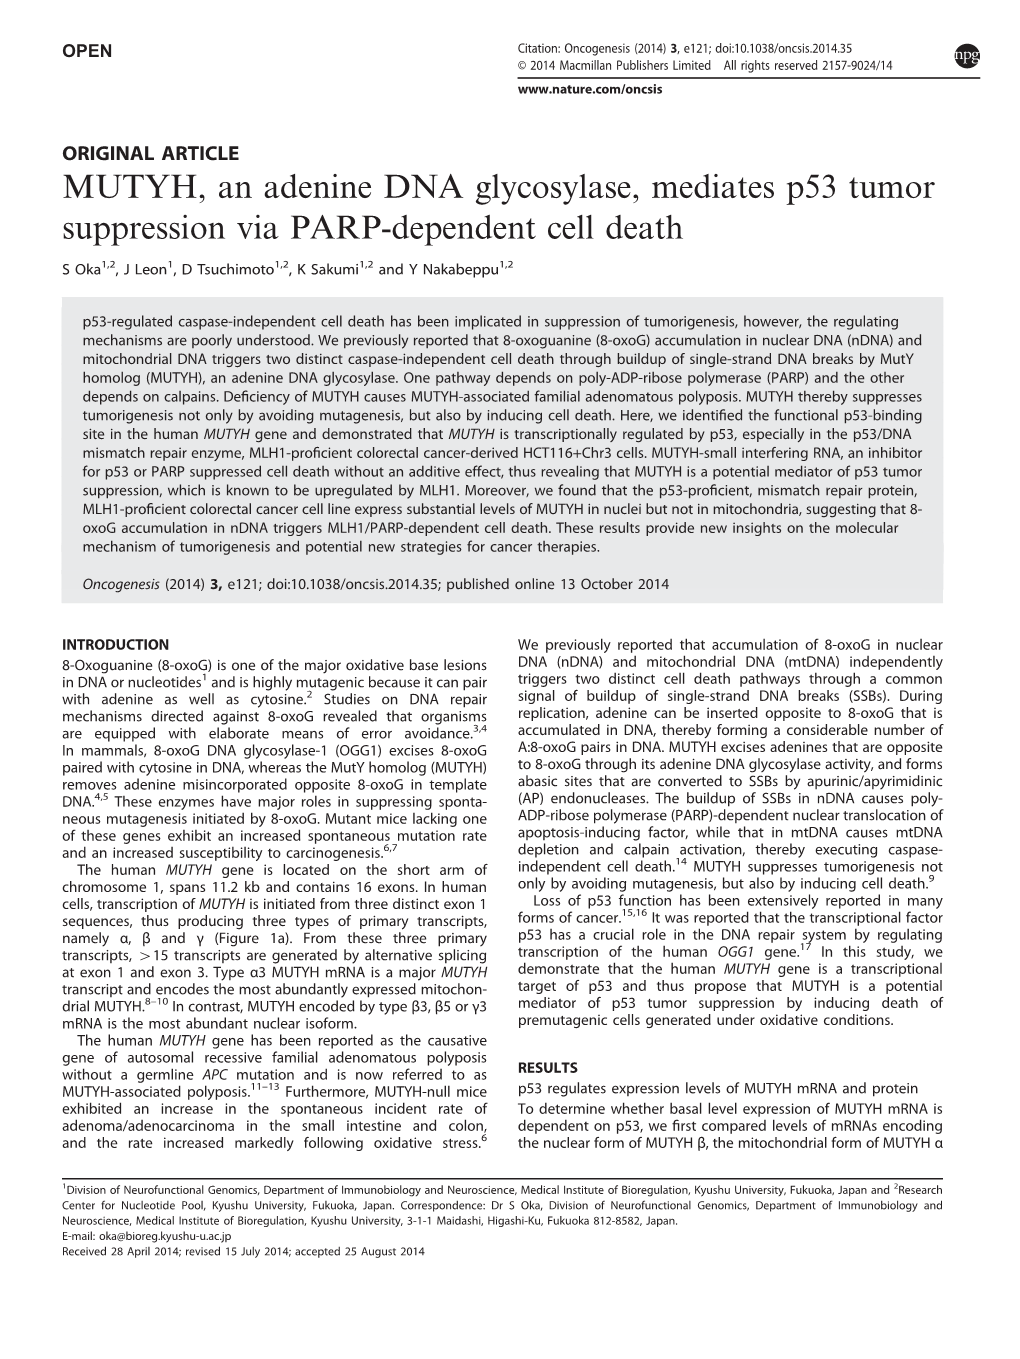 MUTYH, an Adenine DNA Glycosylase, Mediates P53 Tumor Suppression Via PARP-Dependent Cell Death